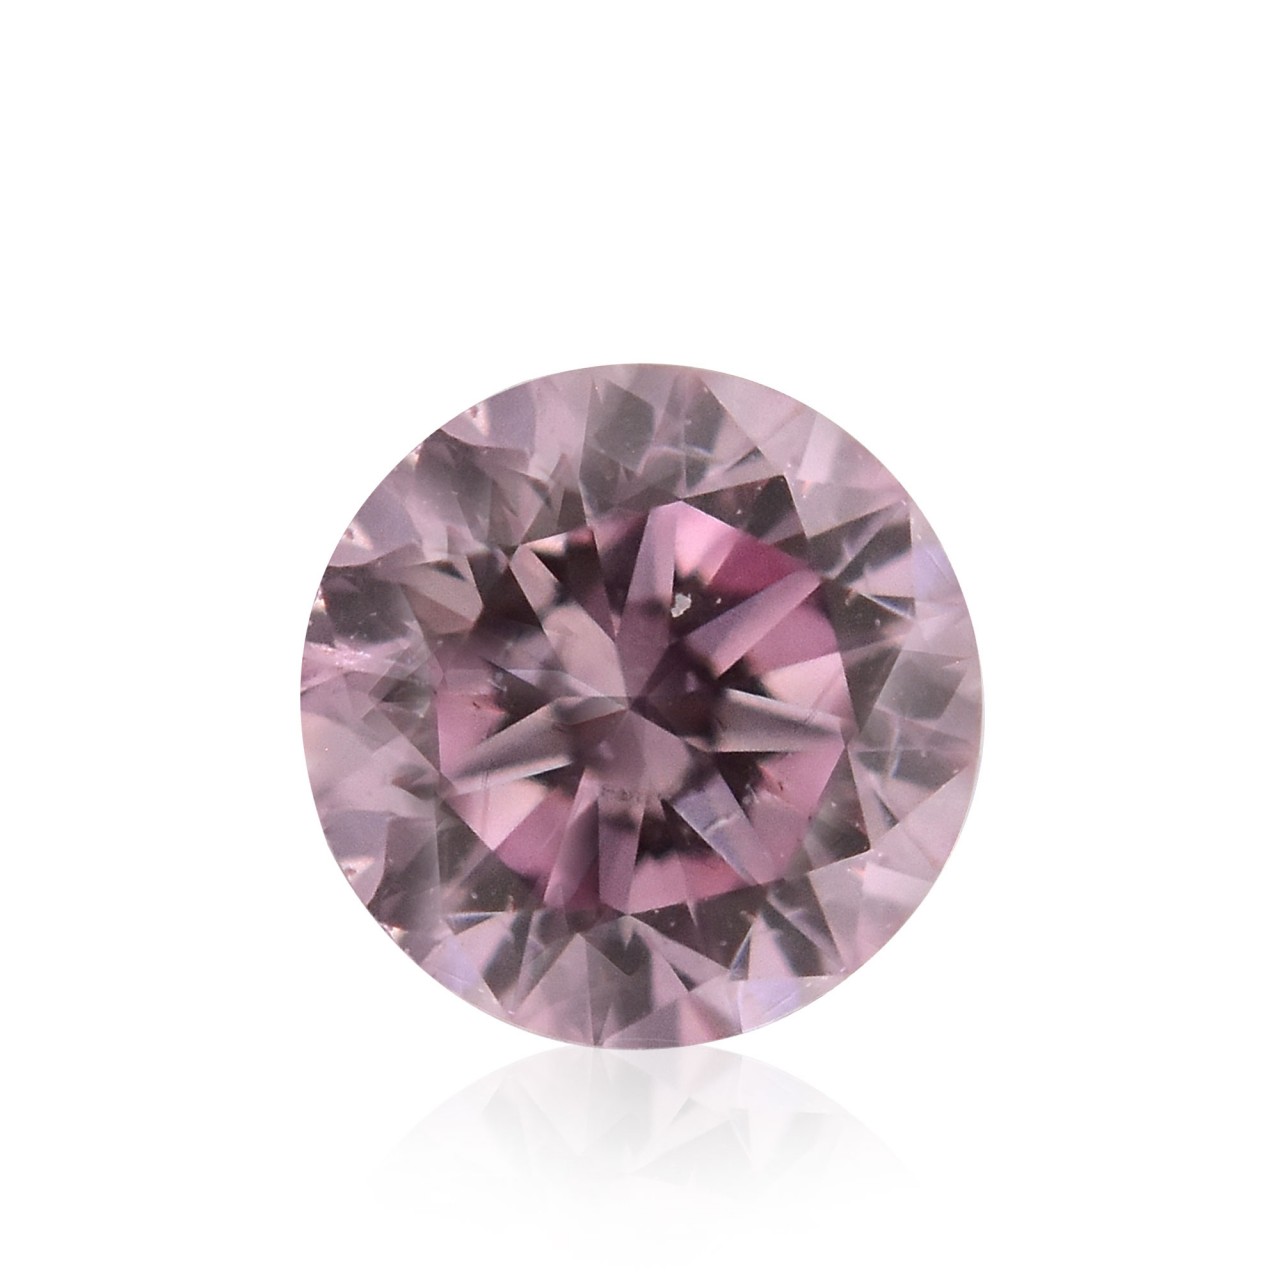 0.15 carat, Fancy Pink Diamond, Round Shape, SI2 Clarity, GIA, SKU